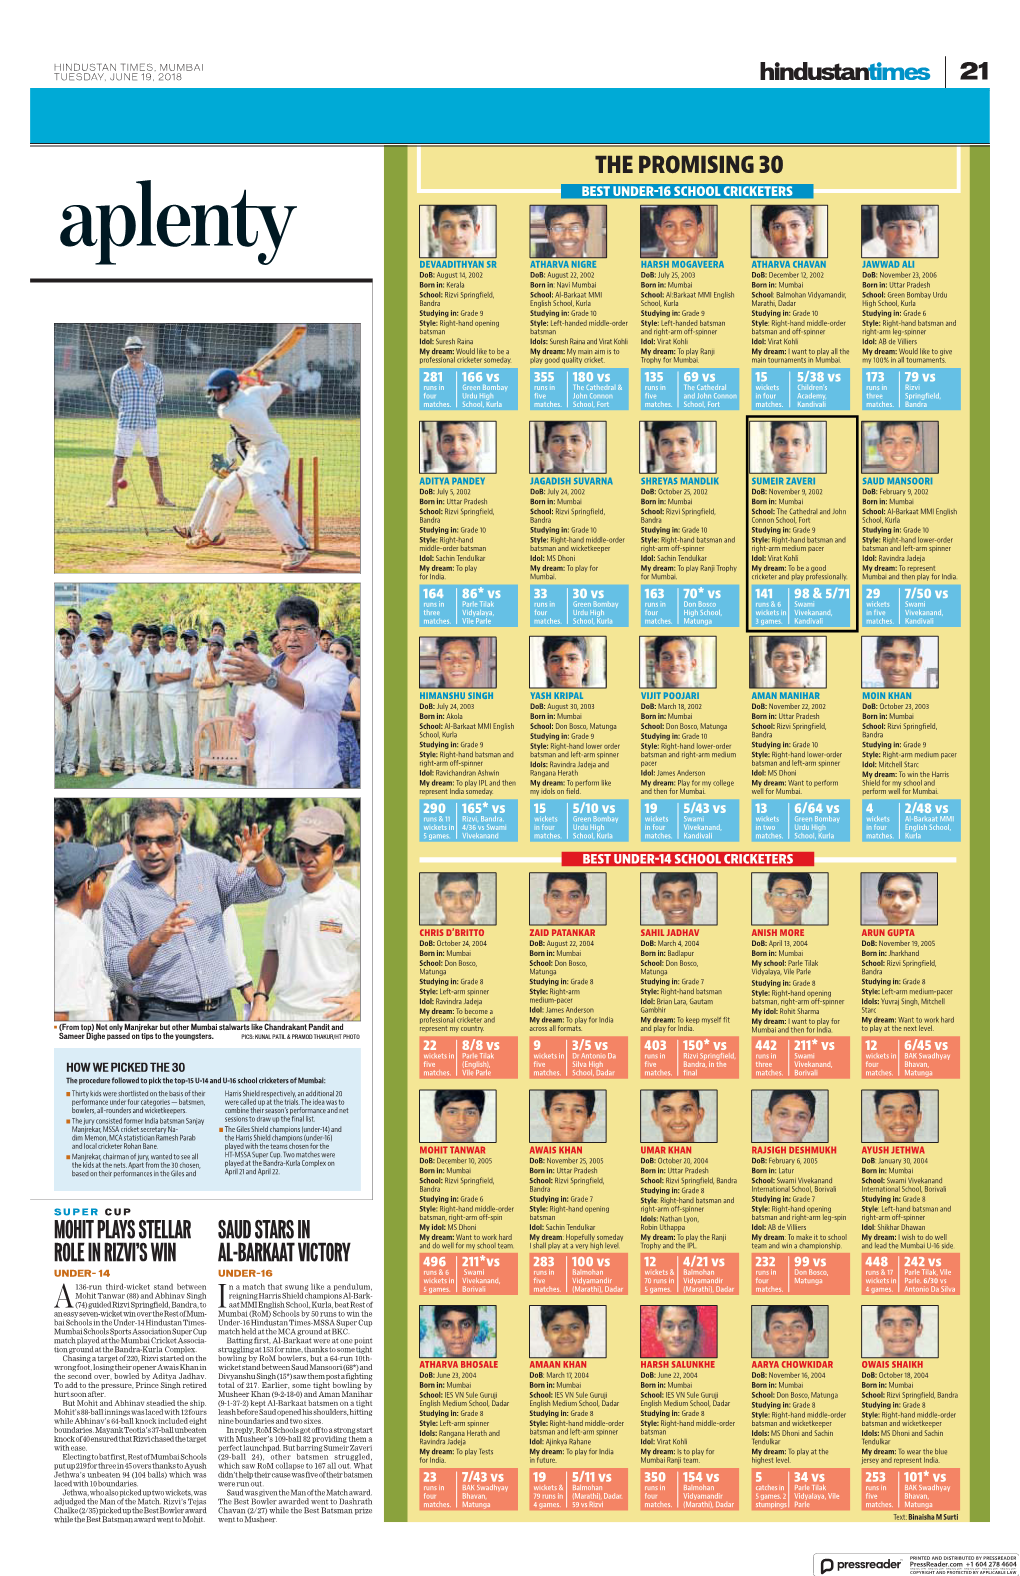 The Promising 30 Best Under 16 School Cricketers